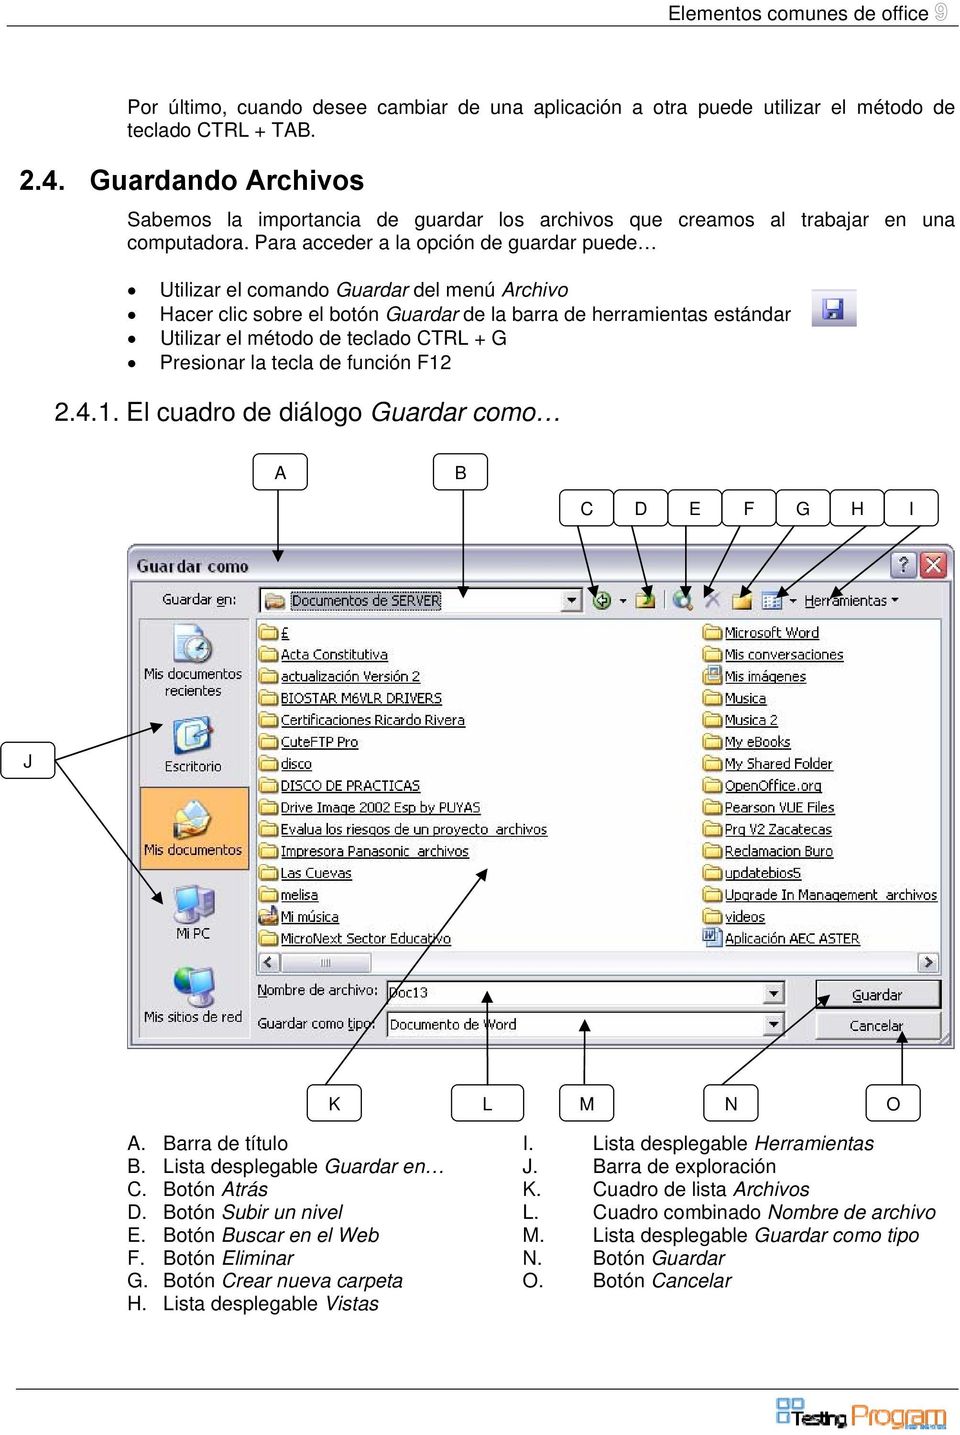 MÓDULO 2. Elementos Comunes de Office - PDF Descargar libre